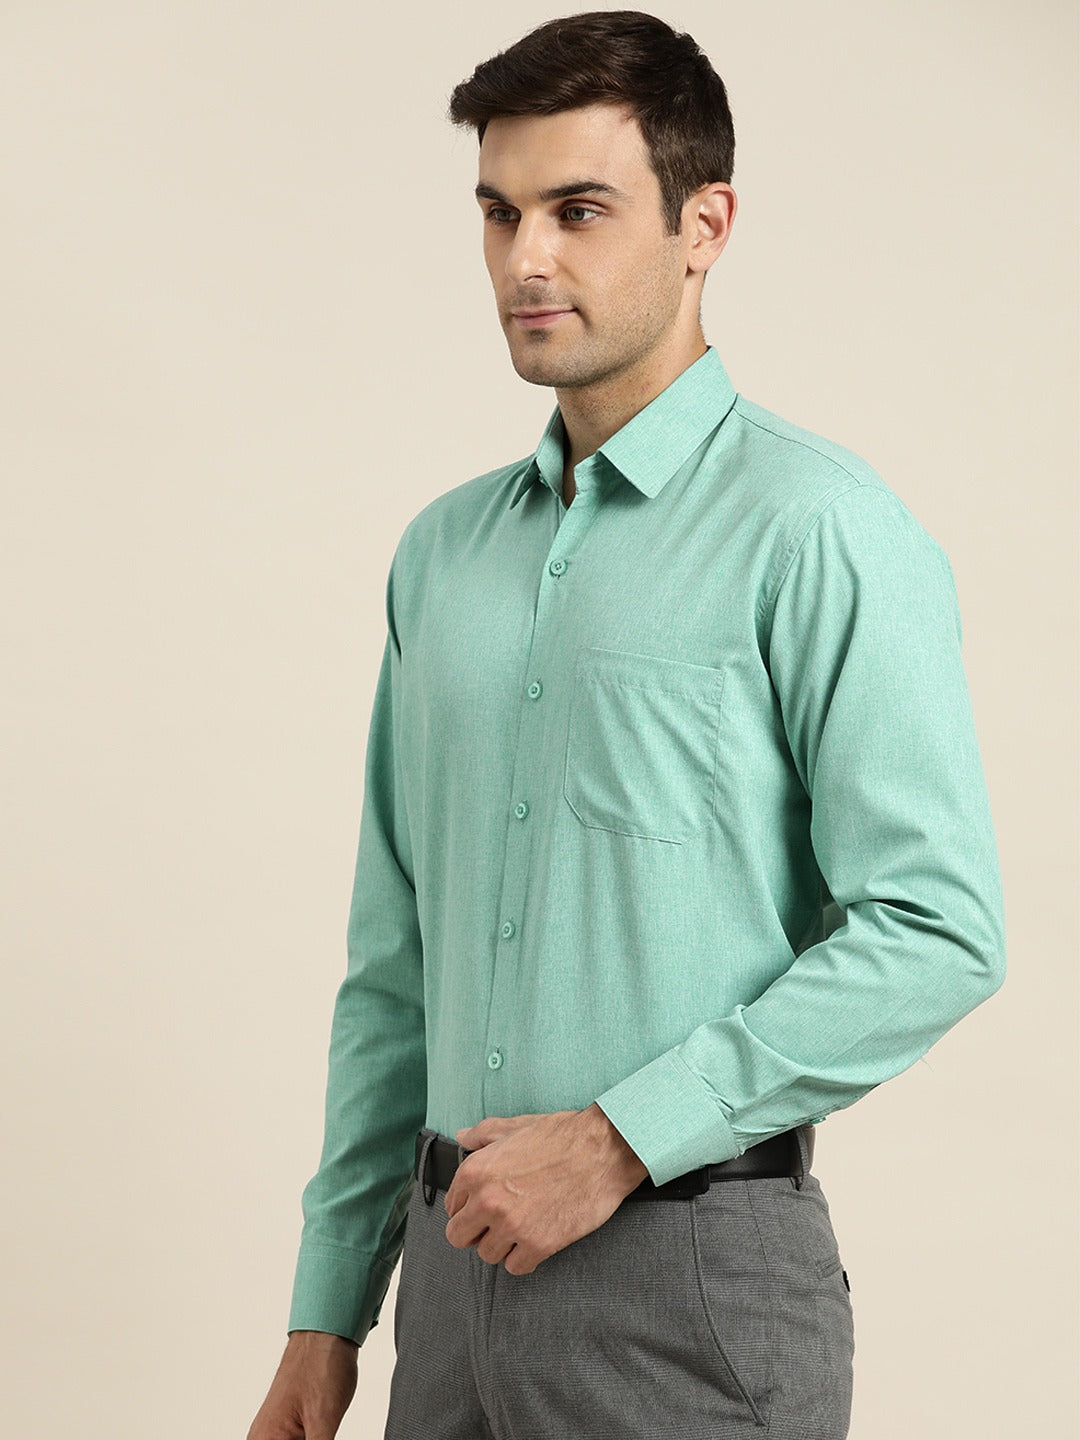 Men's Cotton Sea Green Casual Shirt